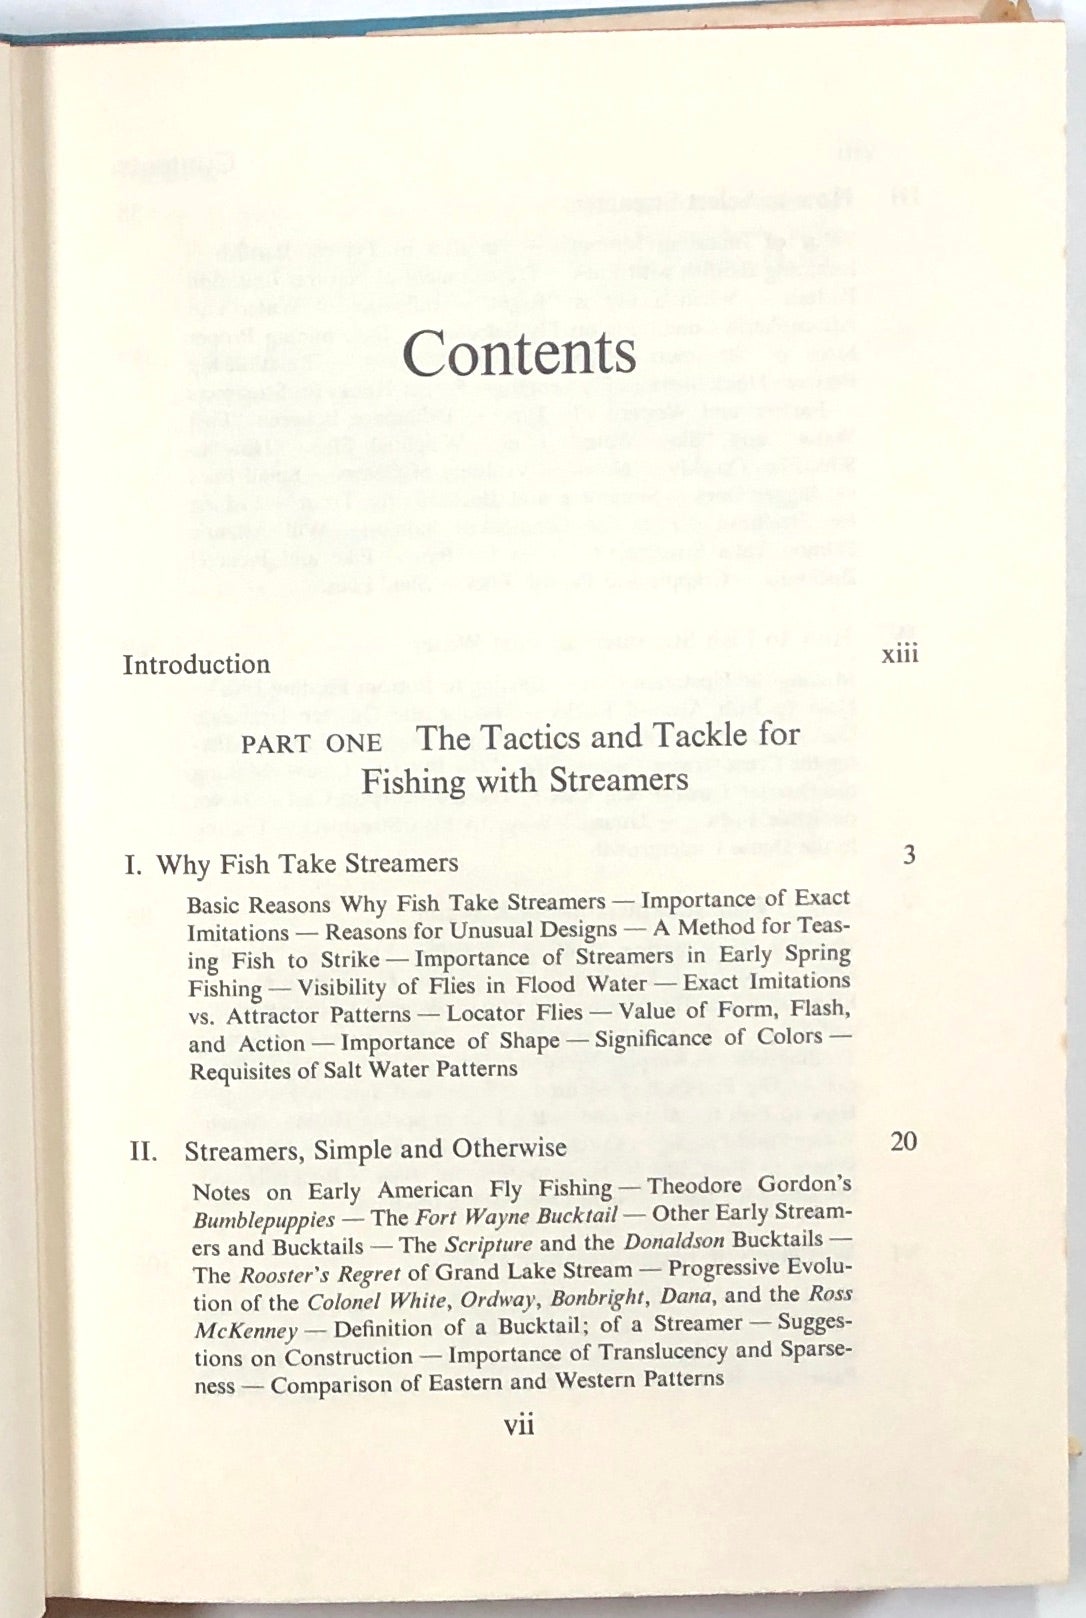 Streamer Fly Tying and Fishing, Joseph D. Bates, Jr., Milton C. Weiler